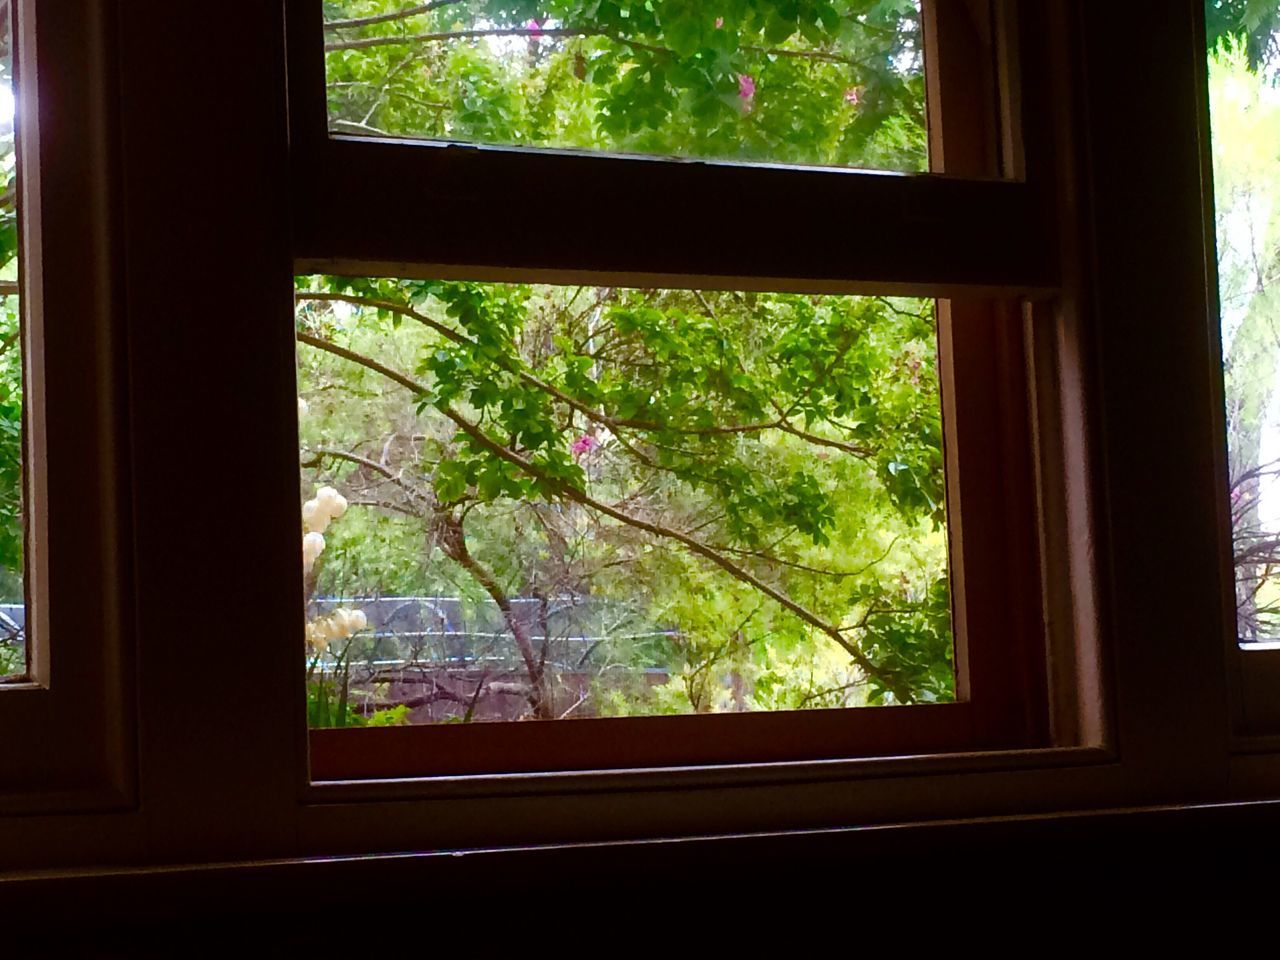 TREES SEEN FROM WINDOW